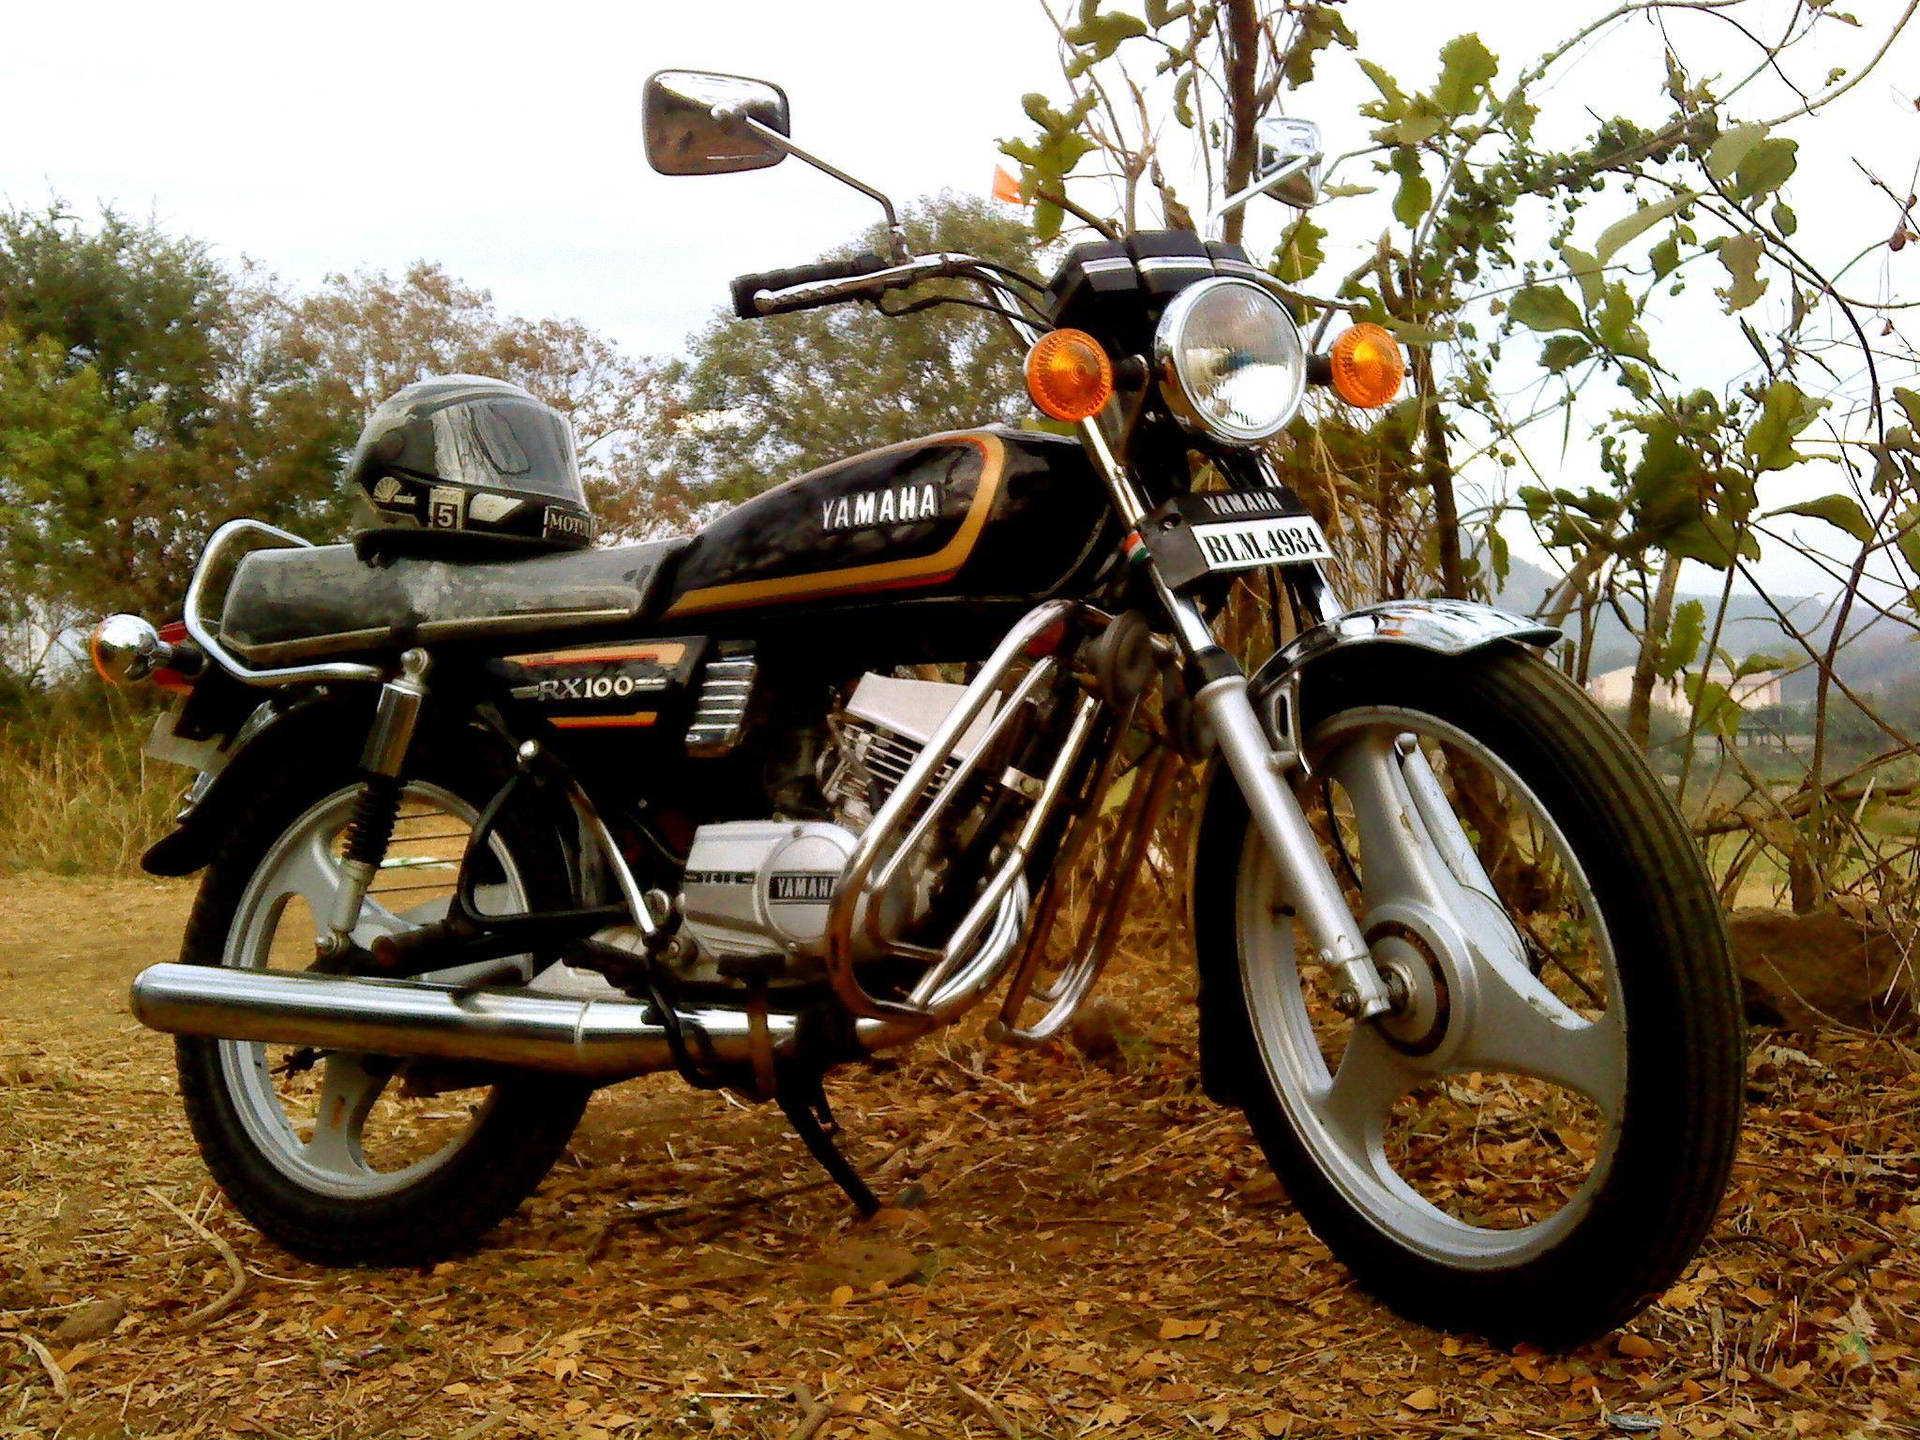 Parked Black Yamaha Rx100 Motorcycle Wallpaper